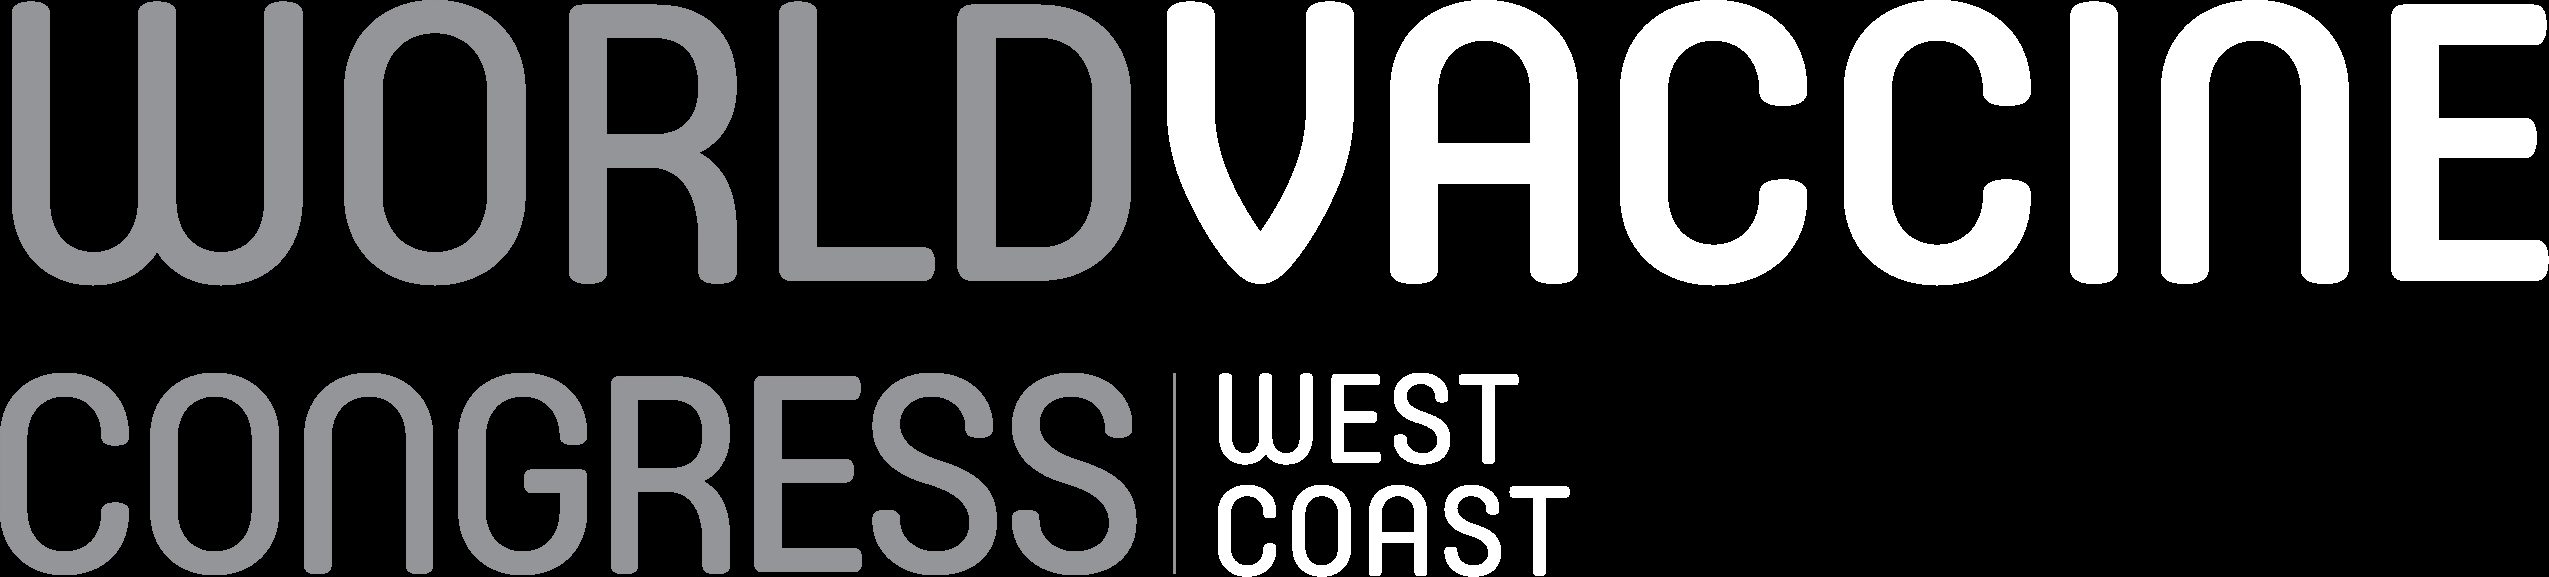 World Vaccine Congress West Coast Logo